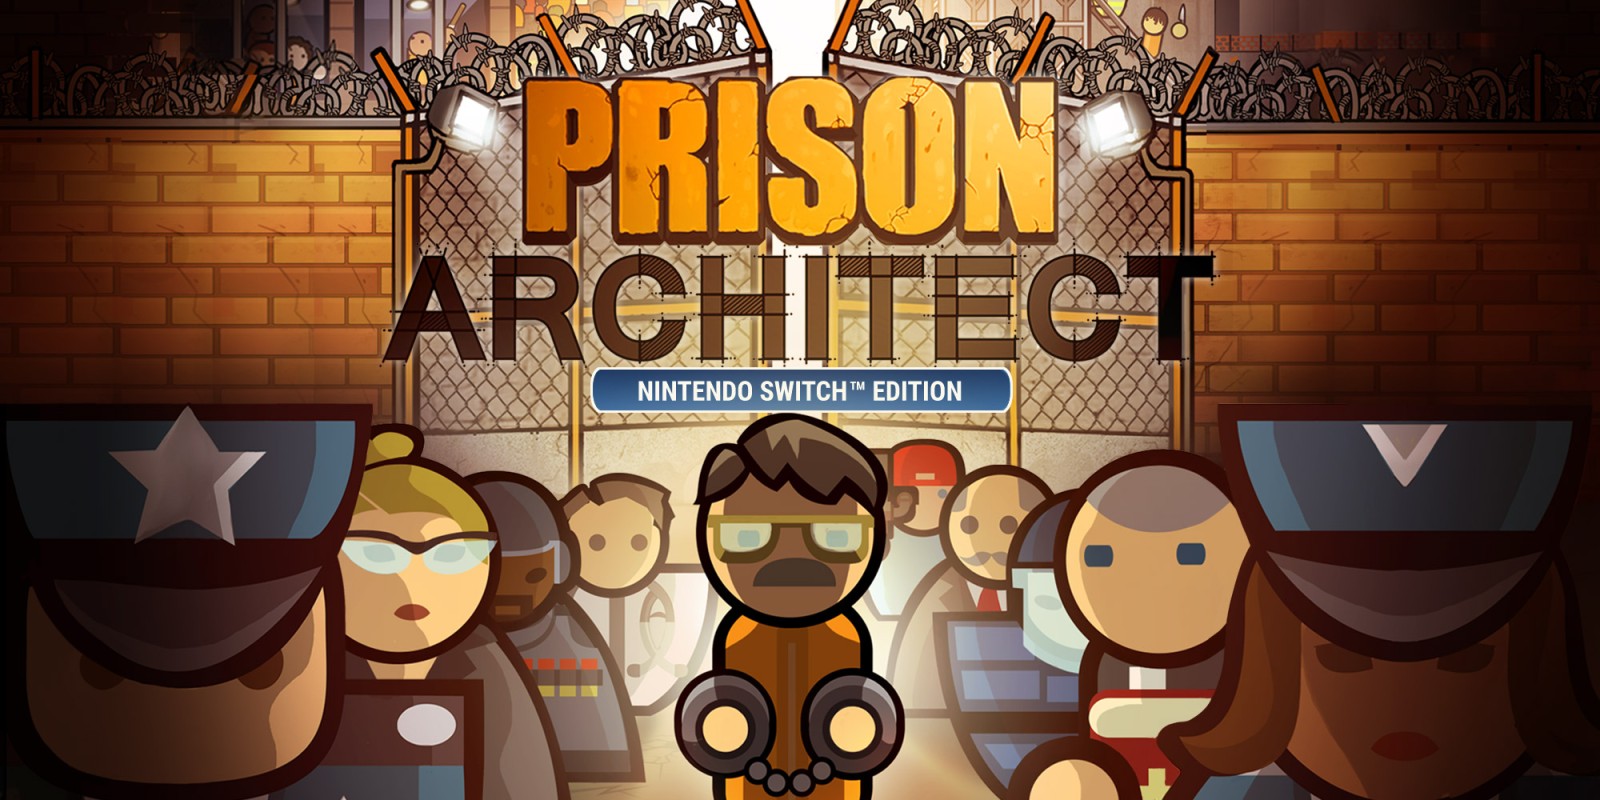 prison architect multiplayer